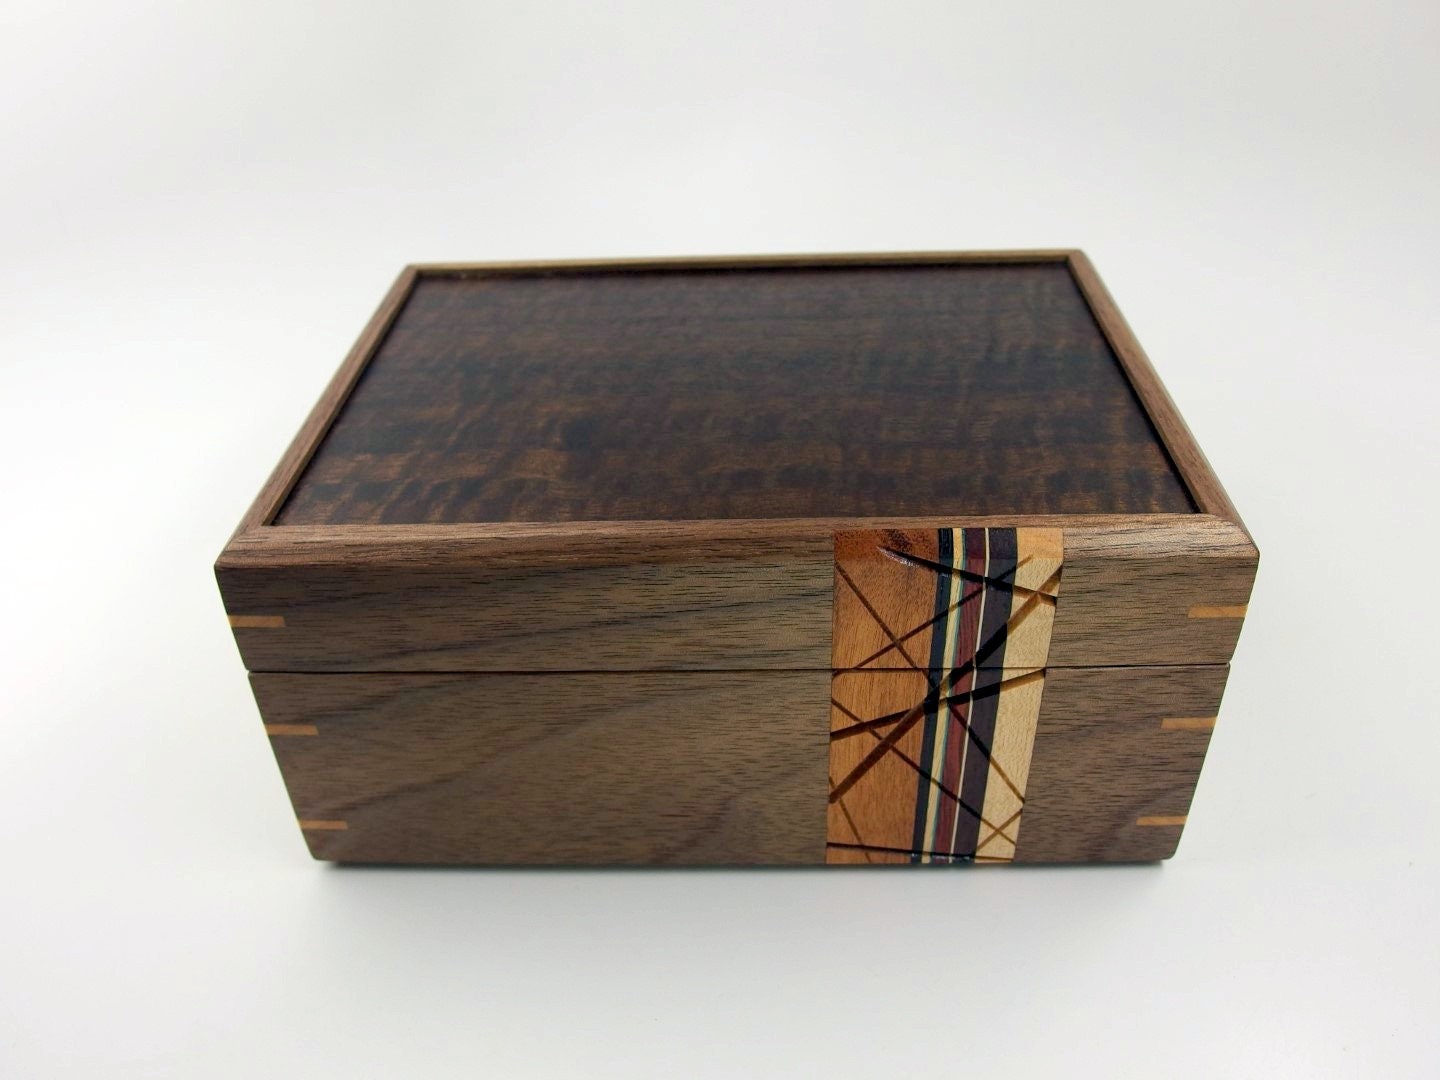 Wooden Box Handmade Rectangular Shaped Home Storage Small Box with Lid Lock